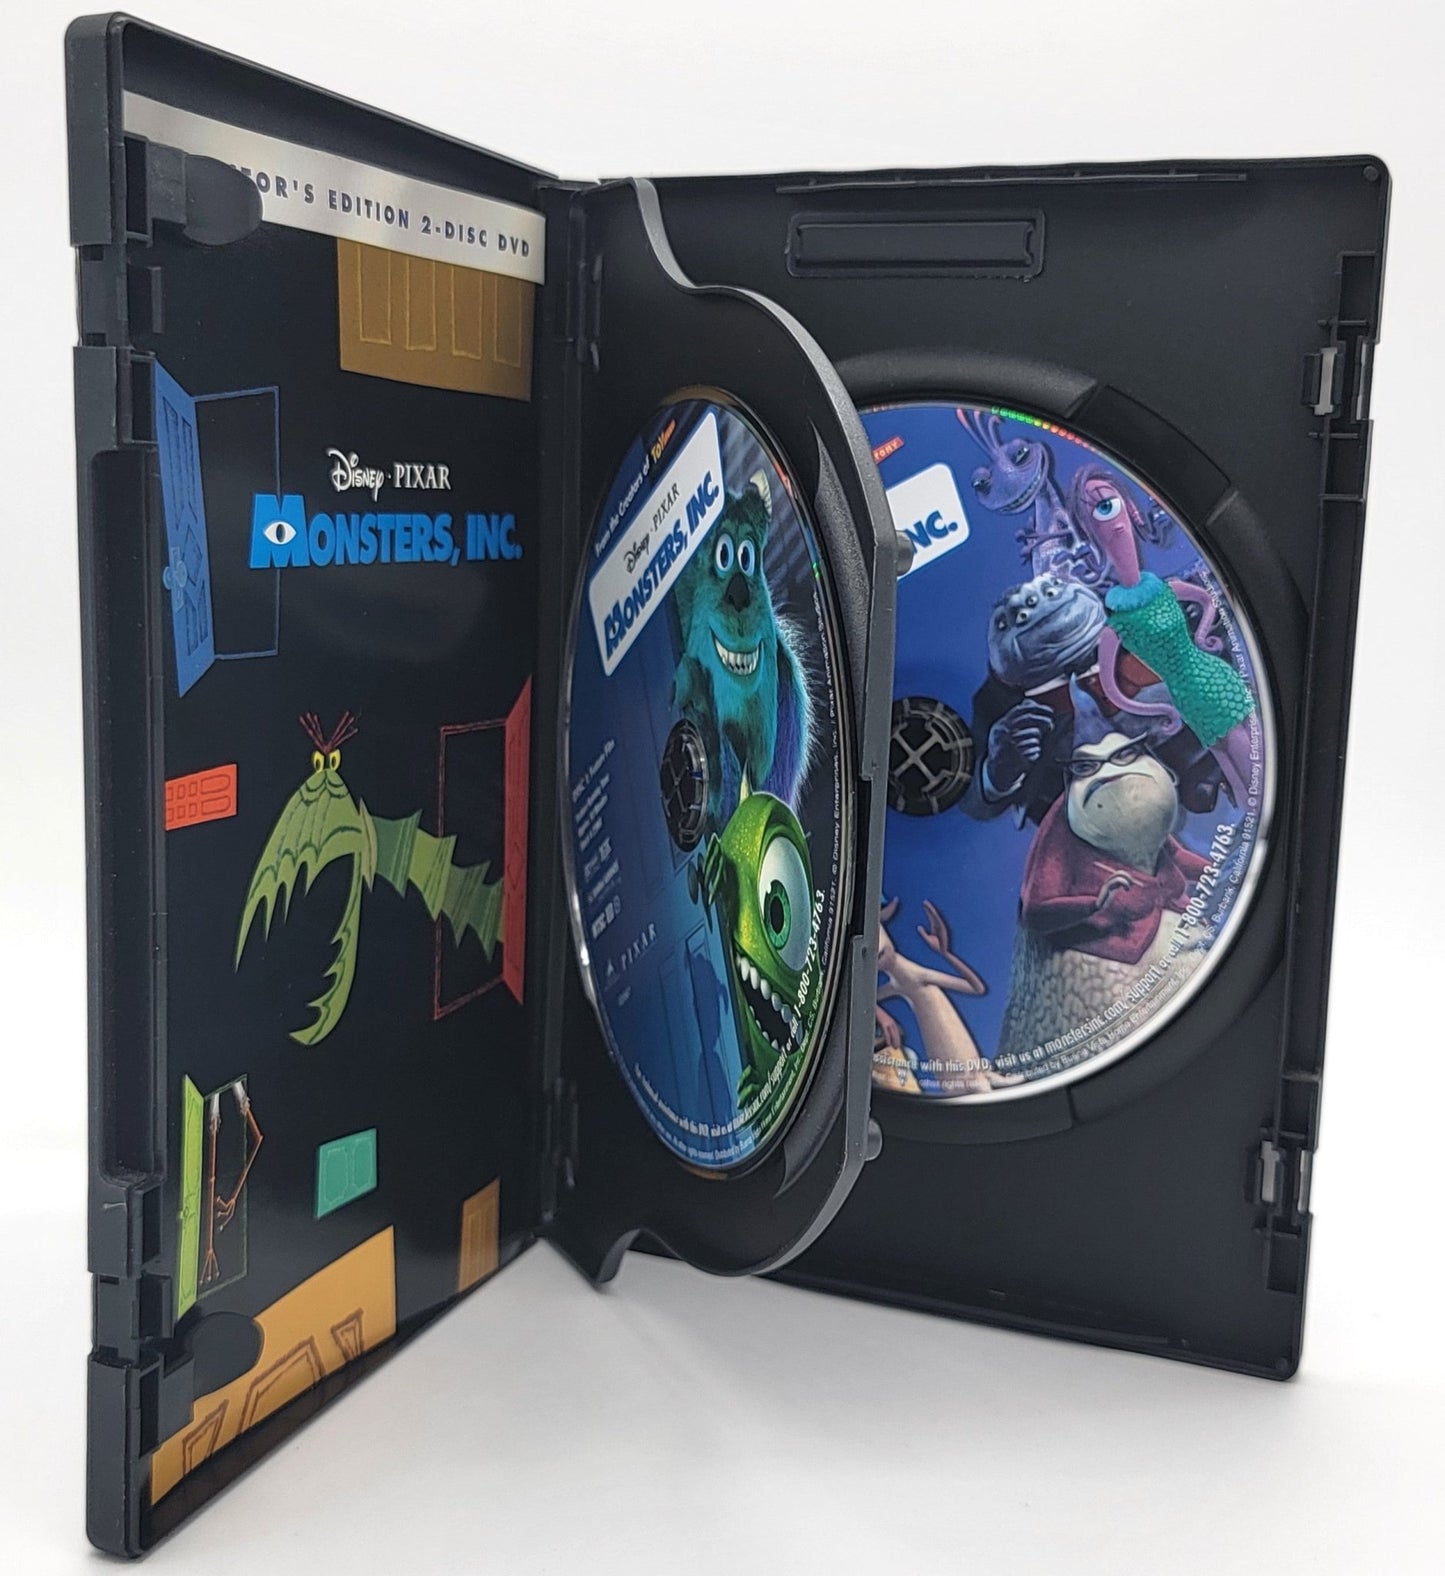 Disney Pixar - Monsters Inc | DVD Collector's Edition 2 Disc Set - DVD - Steady Bunny Shop